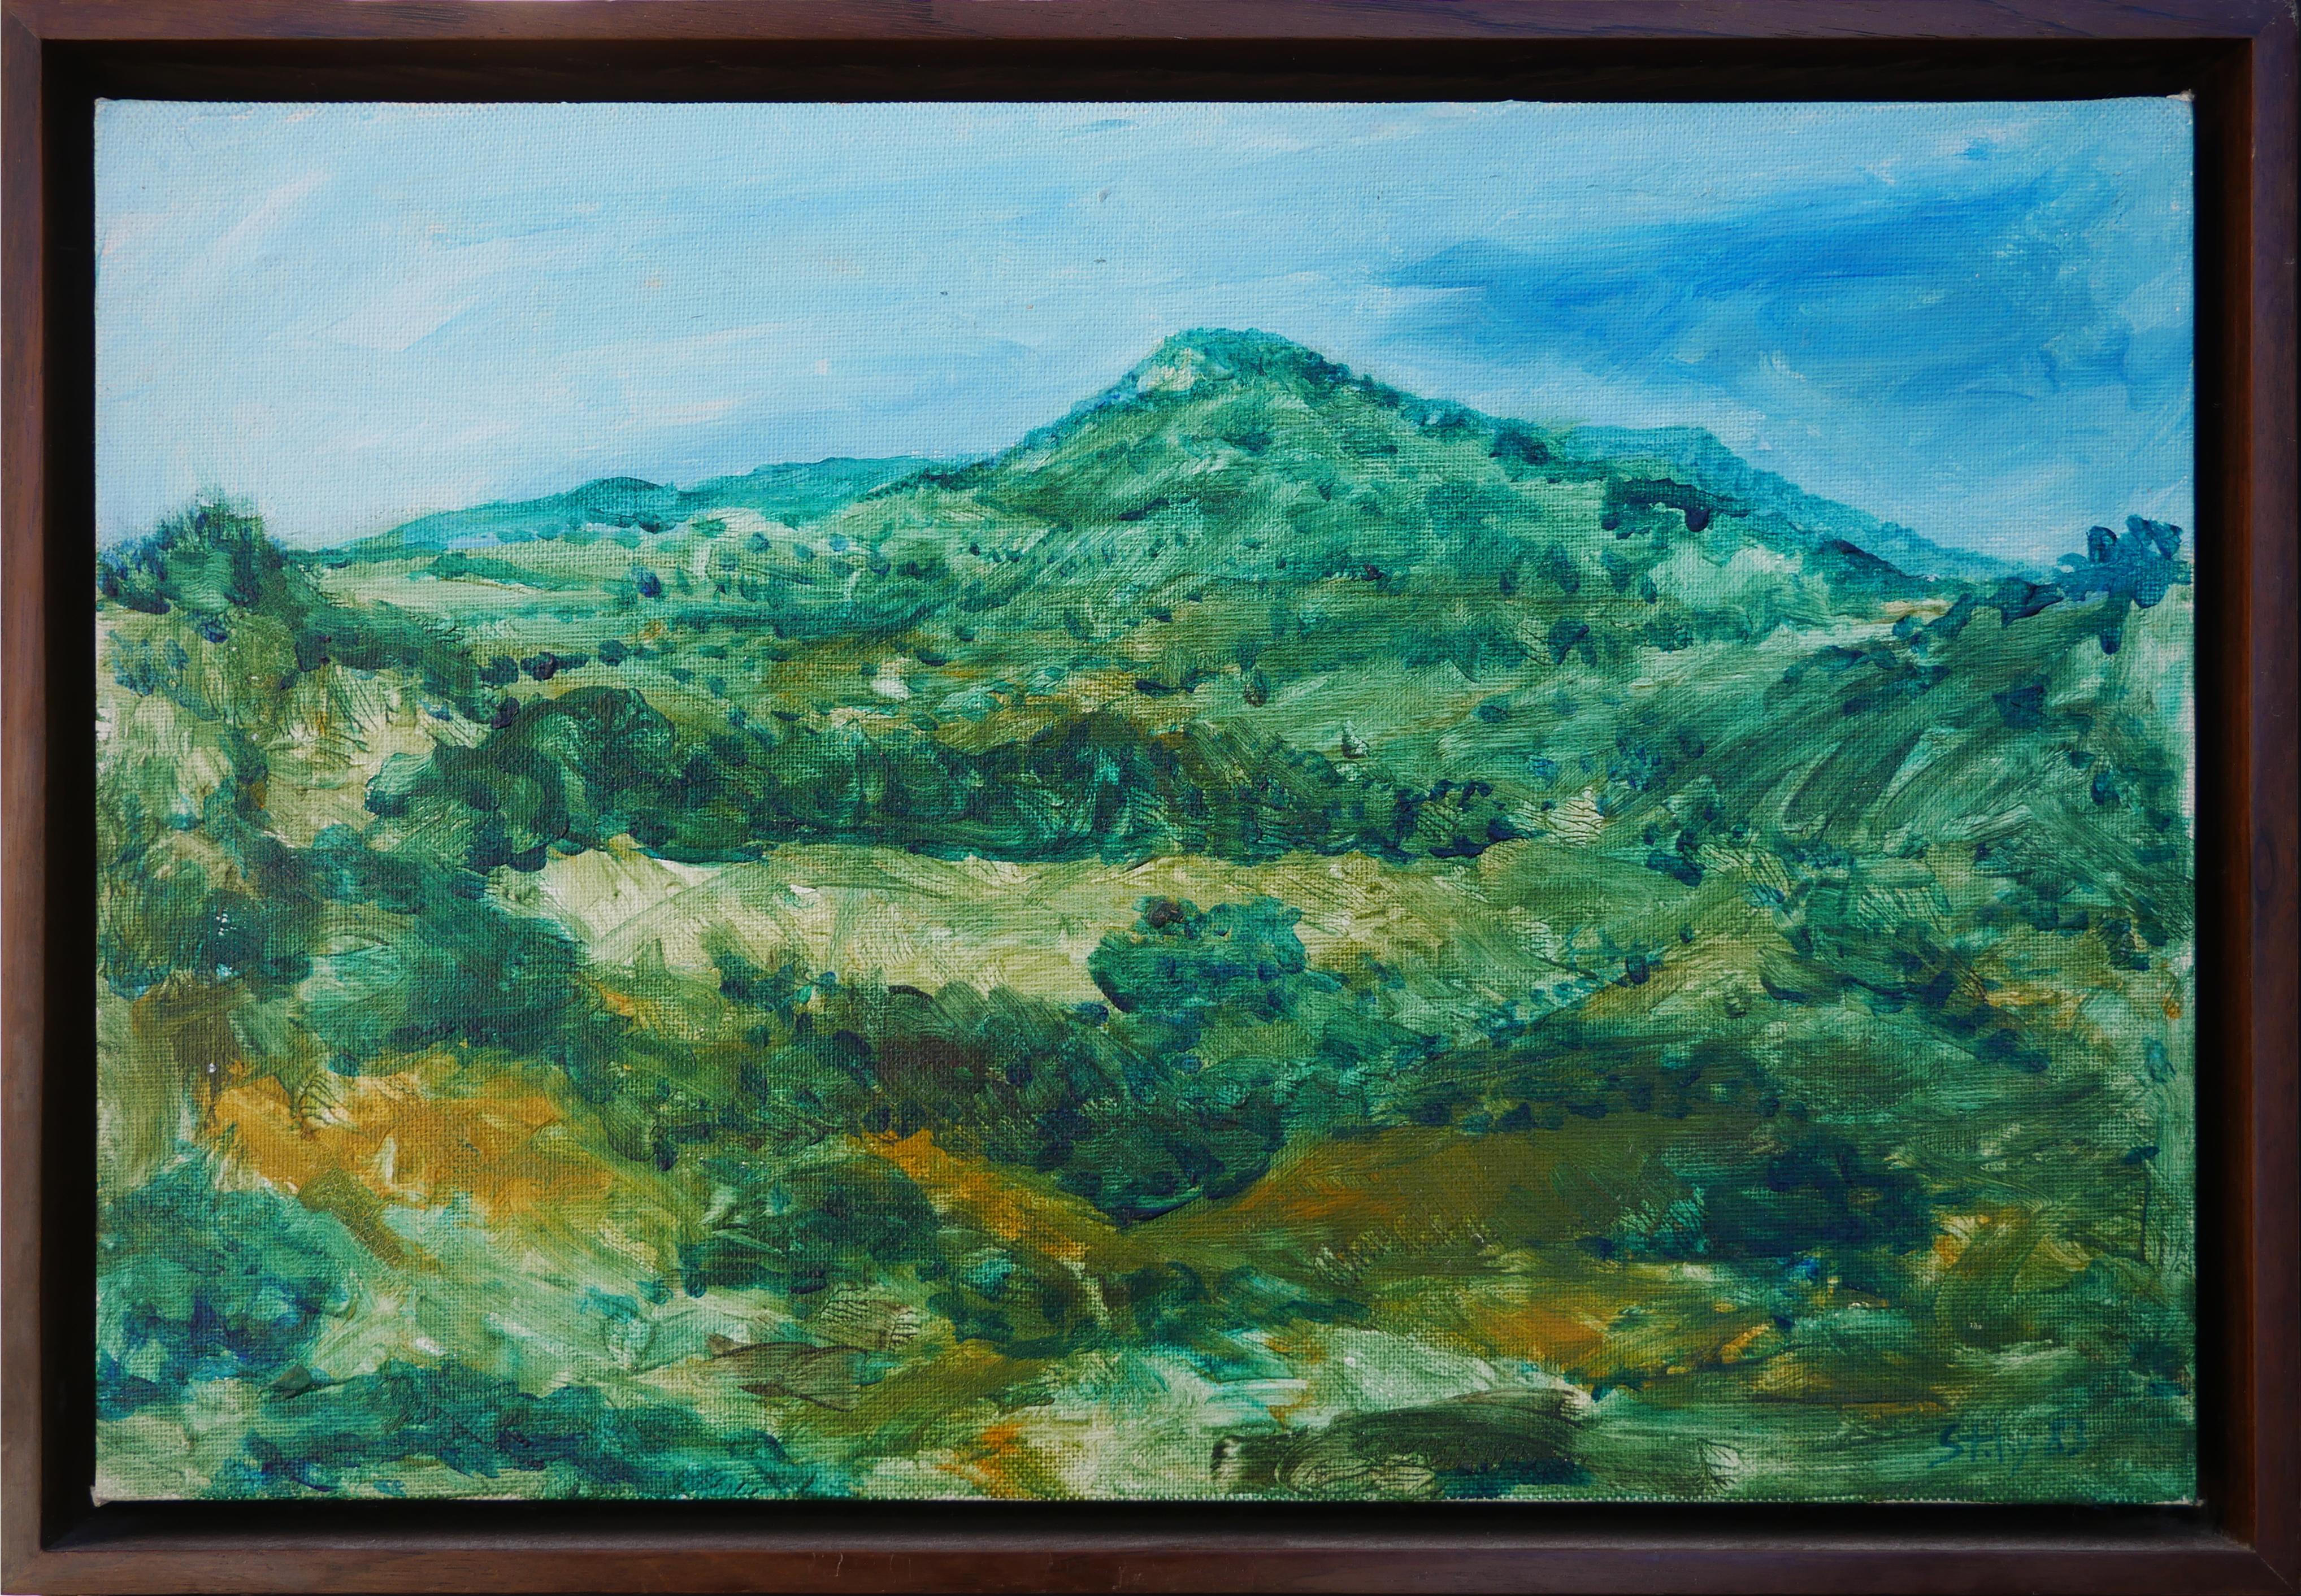 Earl Staley Landscape Painting – Modernes grünes und blau getöntes abstraktes impressionistisches Berglandschaftsgemälde